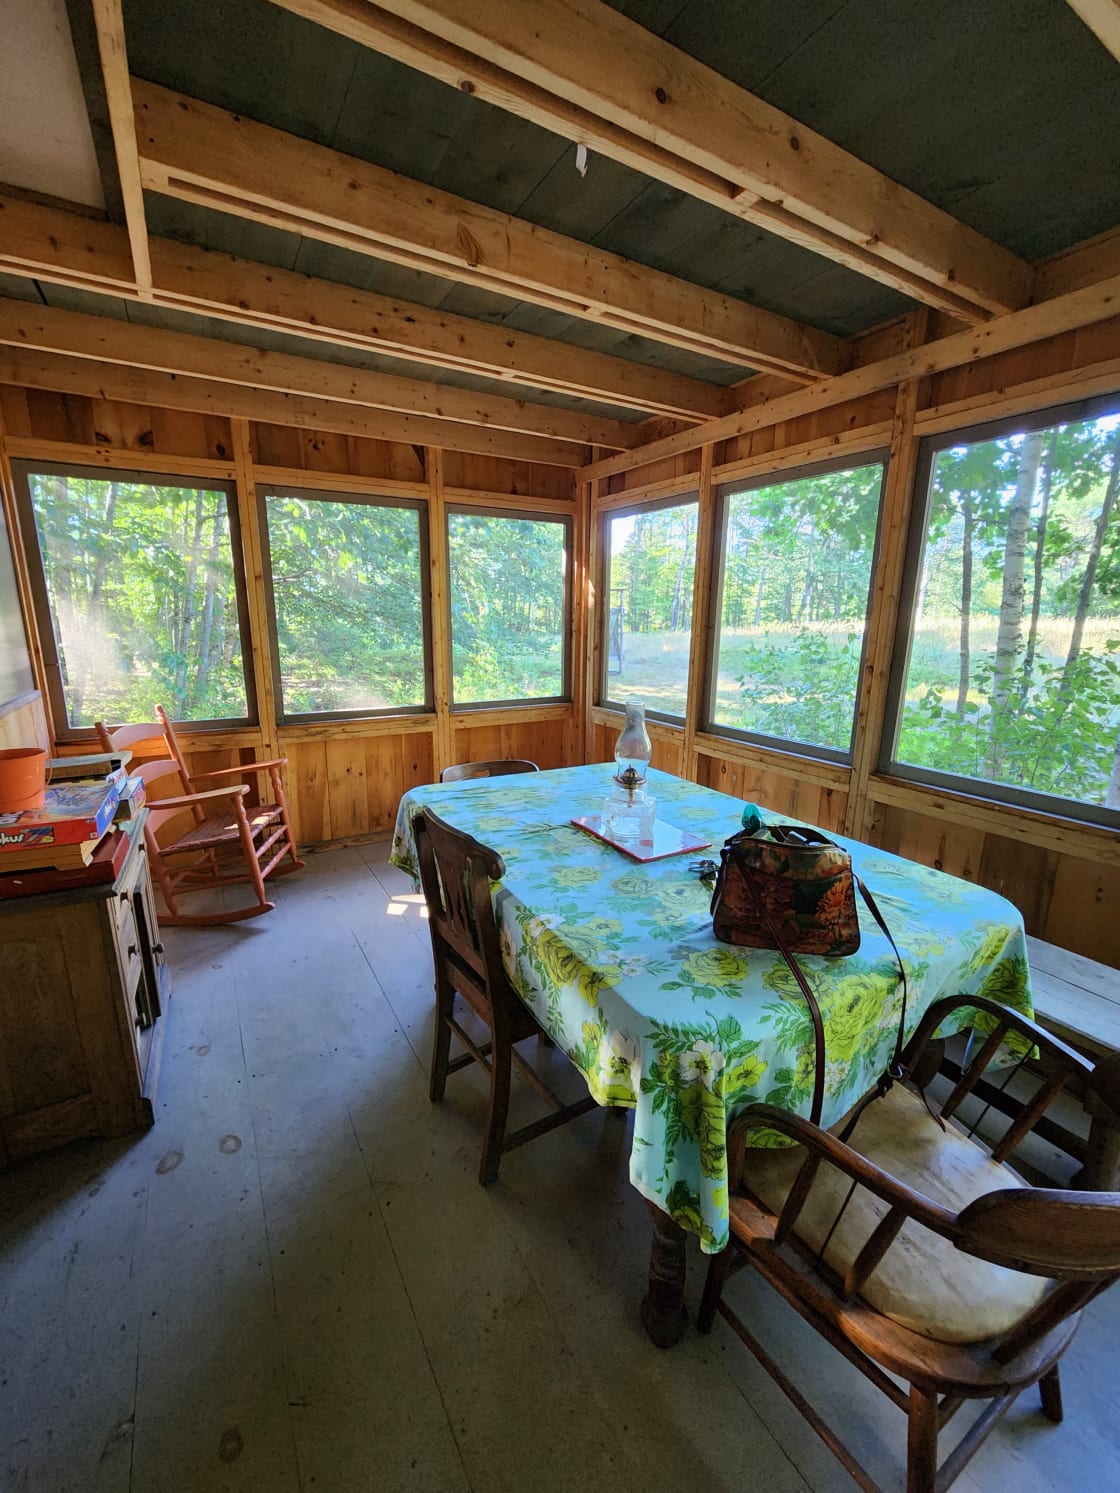 The cabin at White Duck Farm